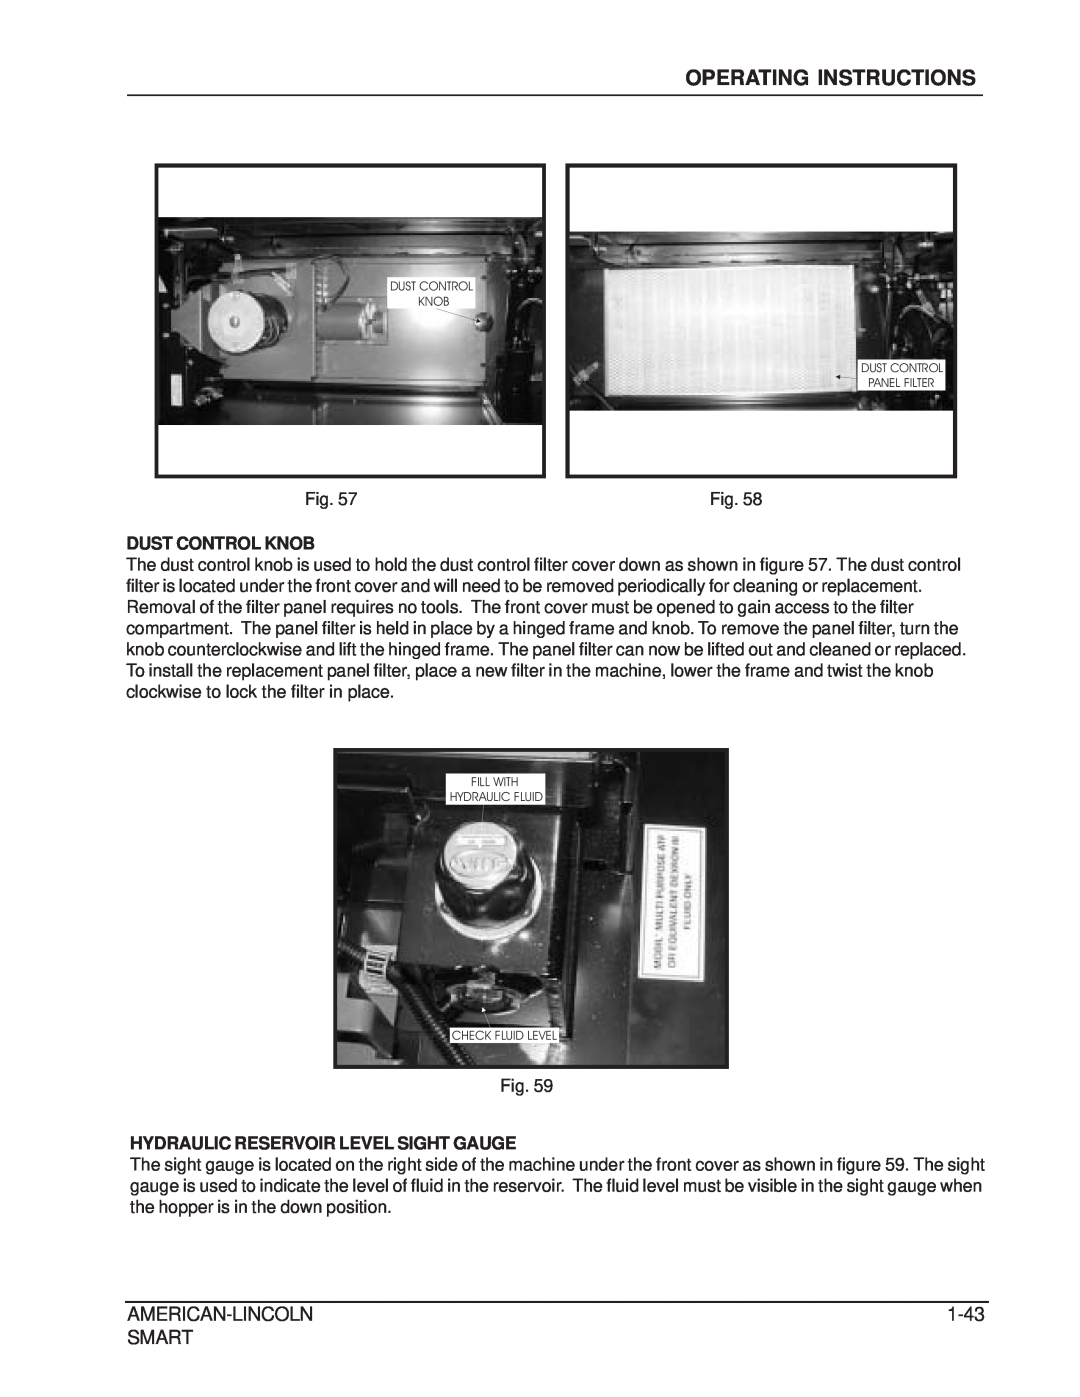 Nilfisk-ALTO 692003 manual Operating Instructions, American-Lincoln, 1-43, Smart, Dust Control Knob 